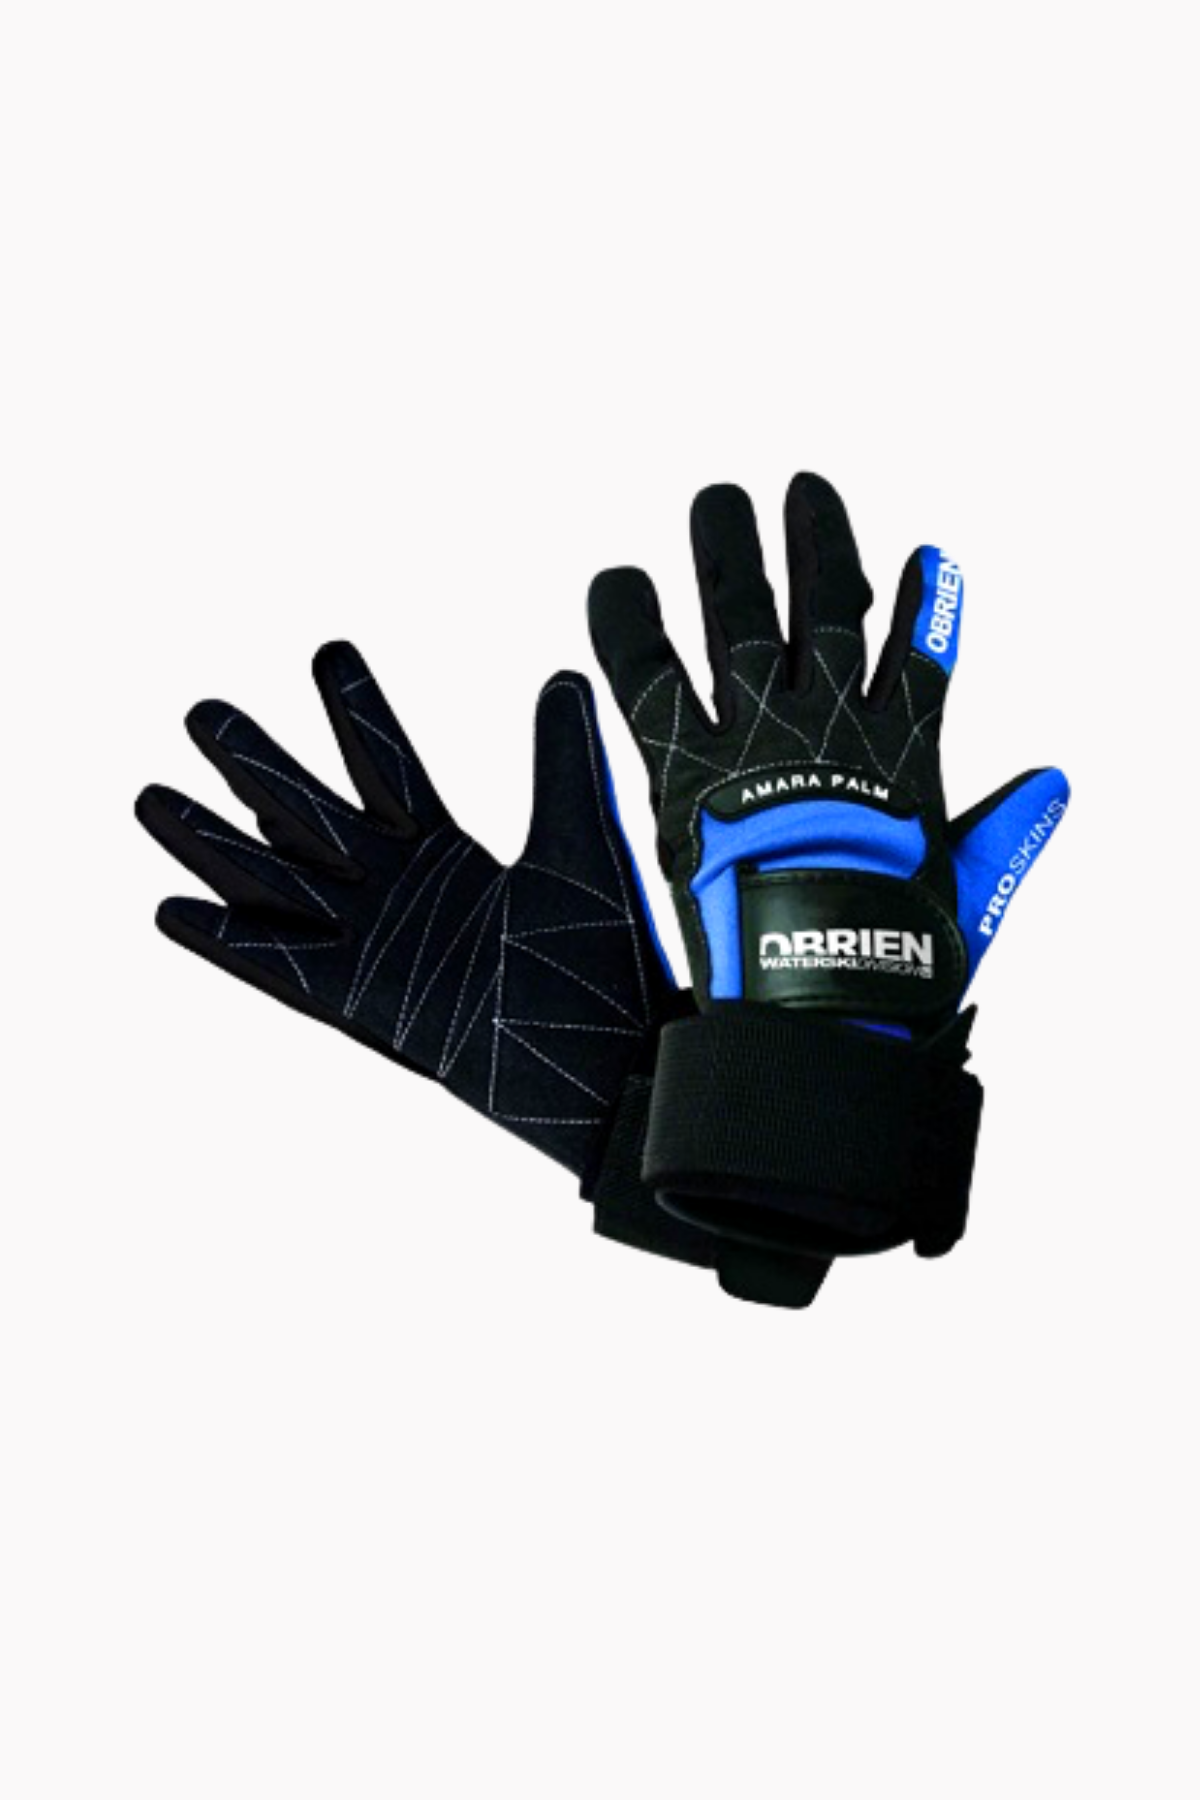 Obrien Pro Skin Water Ski Gloves MEDIUM